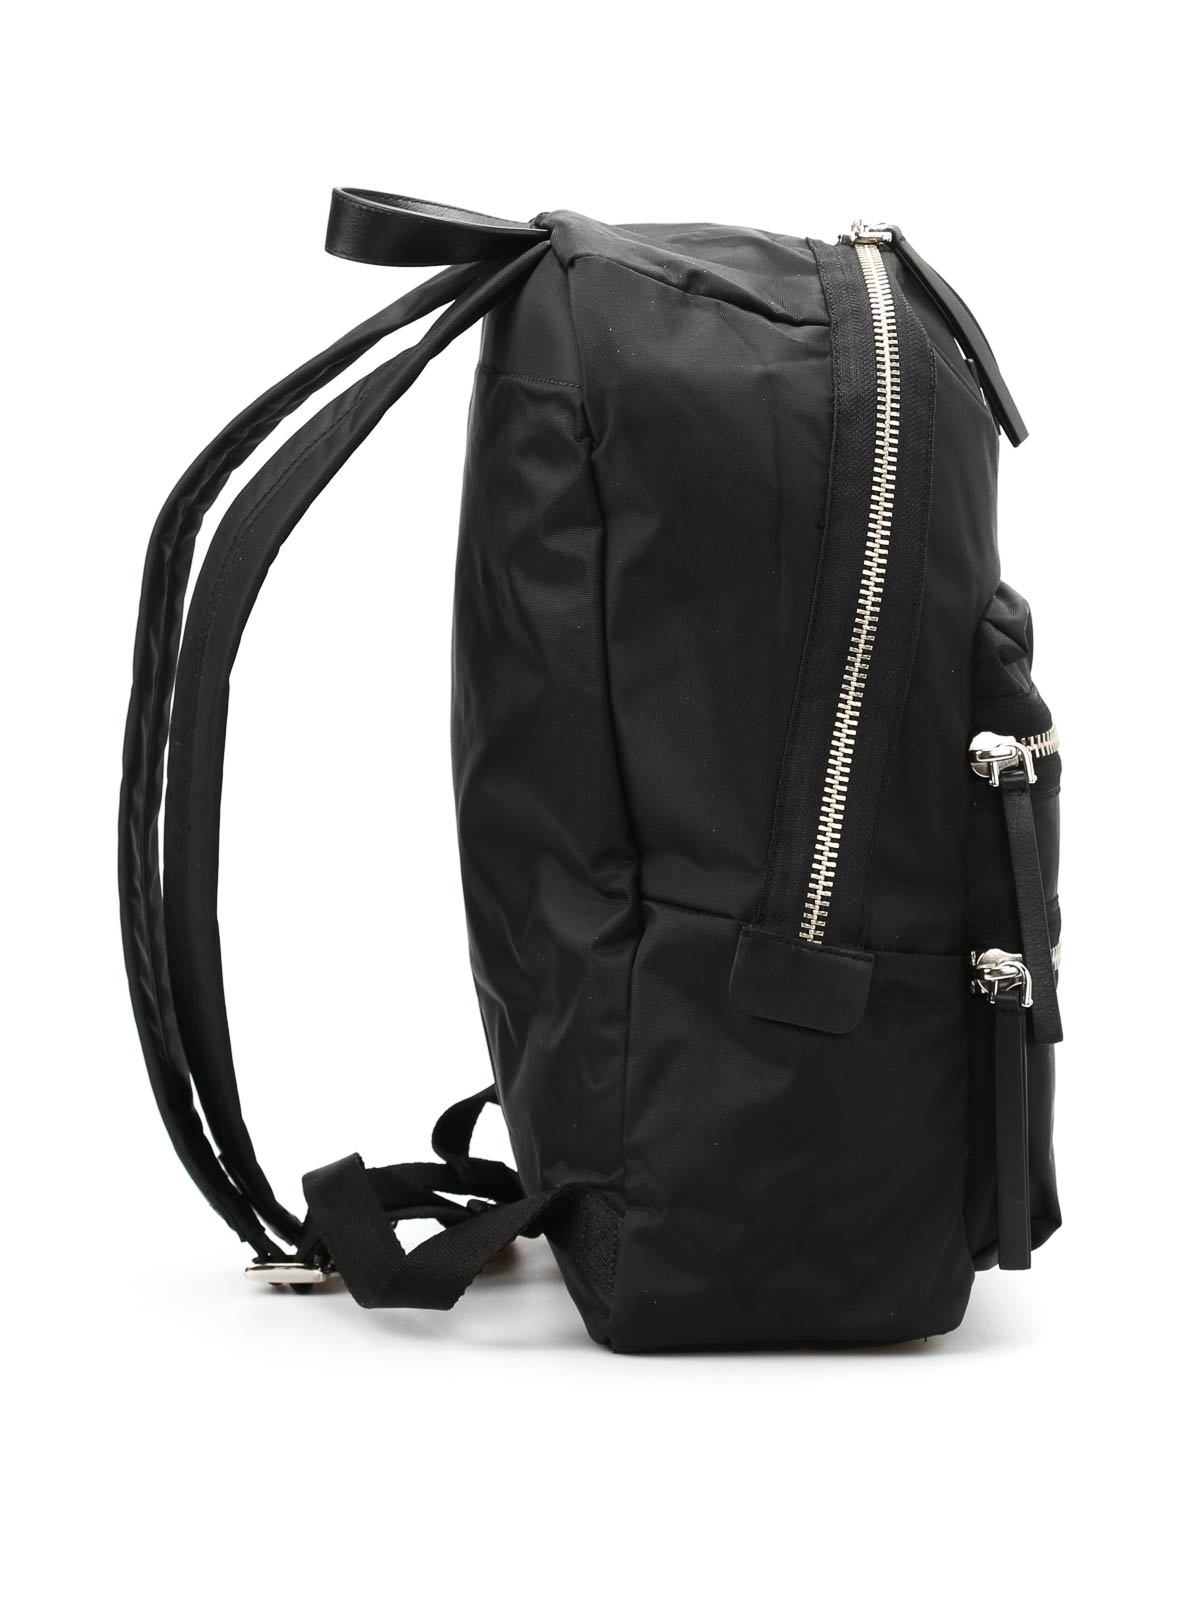 Marc Jacobs The Large Nylon Biker Backpack, Black